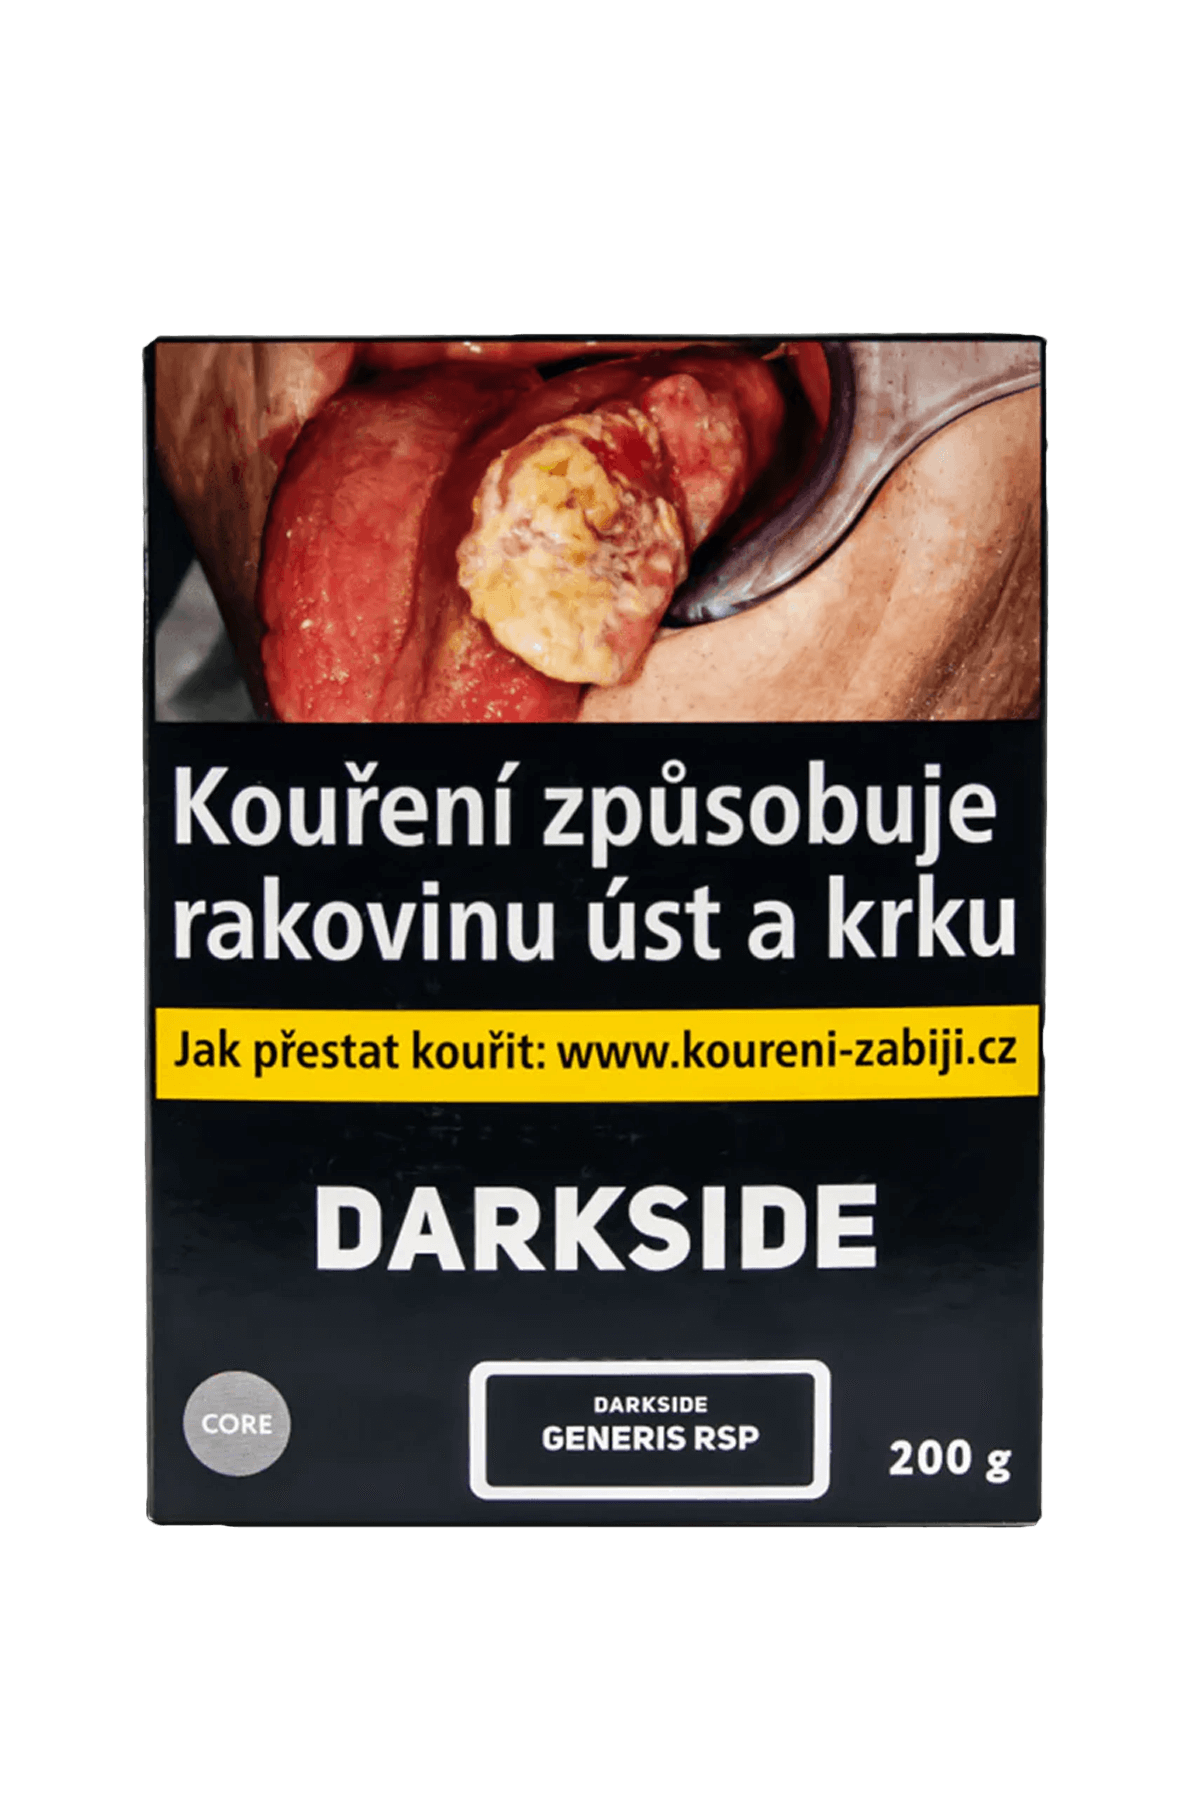 Tobacco - Darkside Core 200g - Generis Rsp